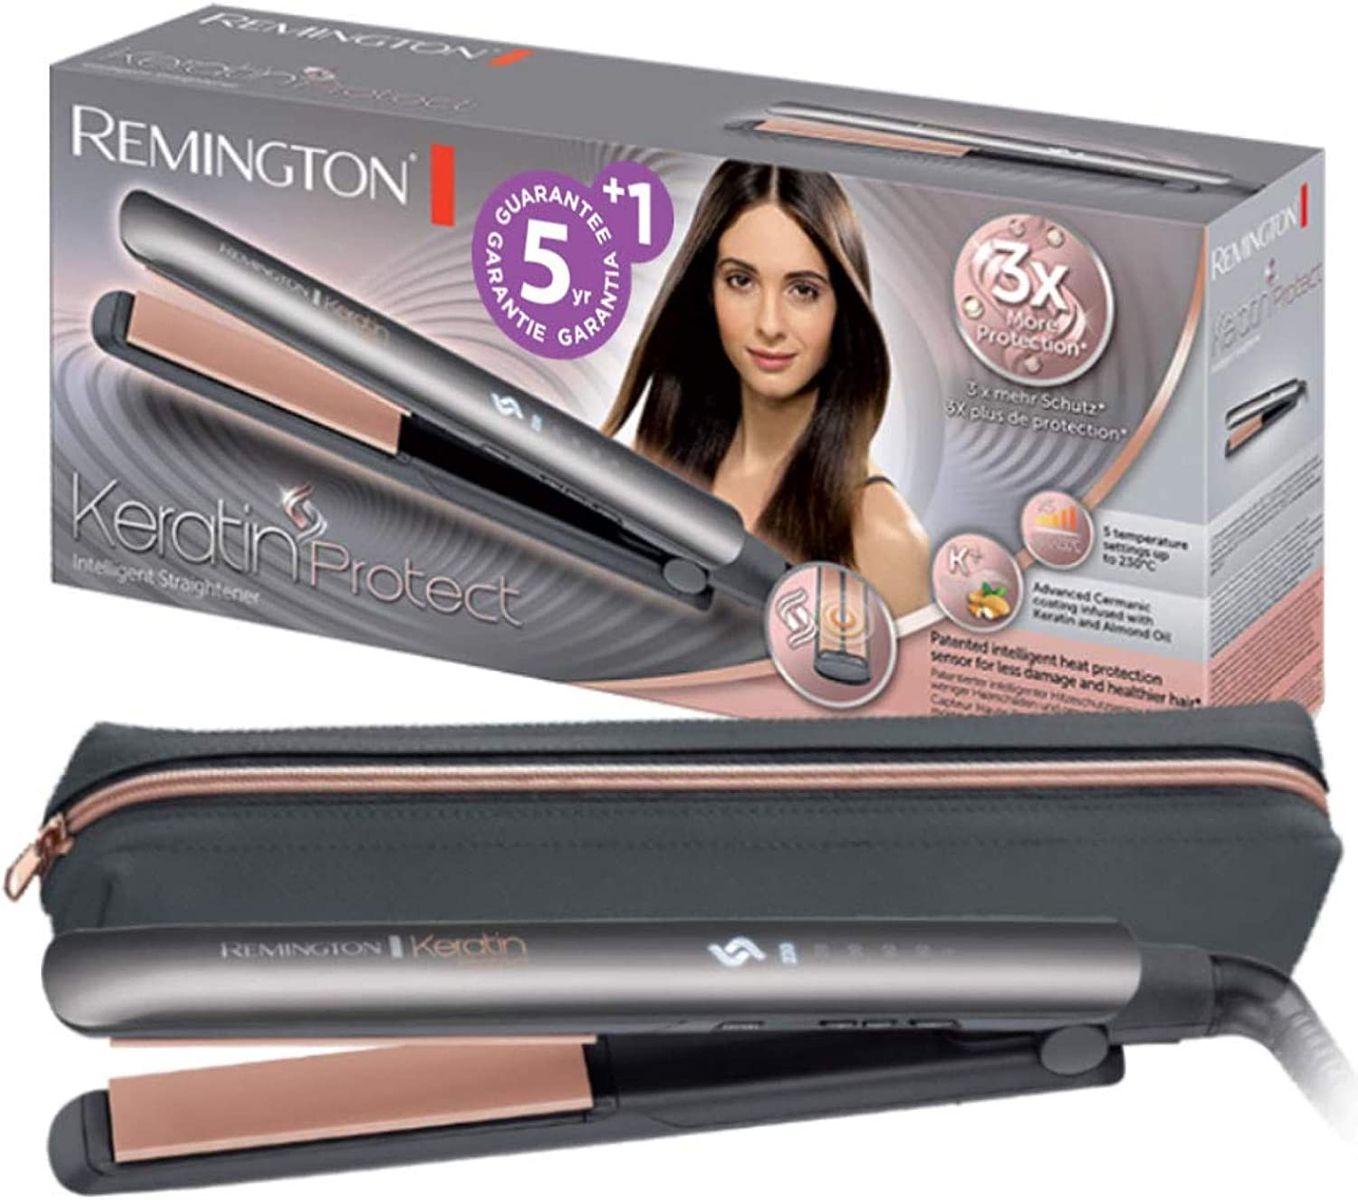 Remington Glätteisen Keratin Protect (patentierter Hitzeschutzsensor für 3x mehr Schutz vor Haarschäden -misst konstant den Feuchtigkeitsgehalt im Haar) Digitales Display, 160-230°C, Haarglätter S8598 Haarglätter Protect